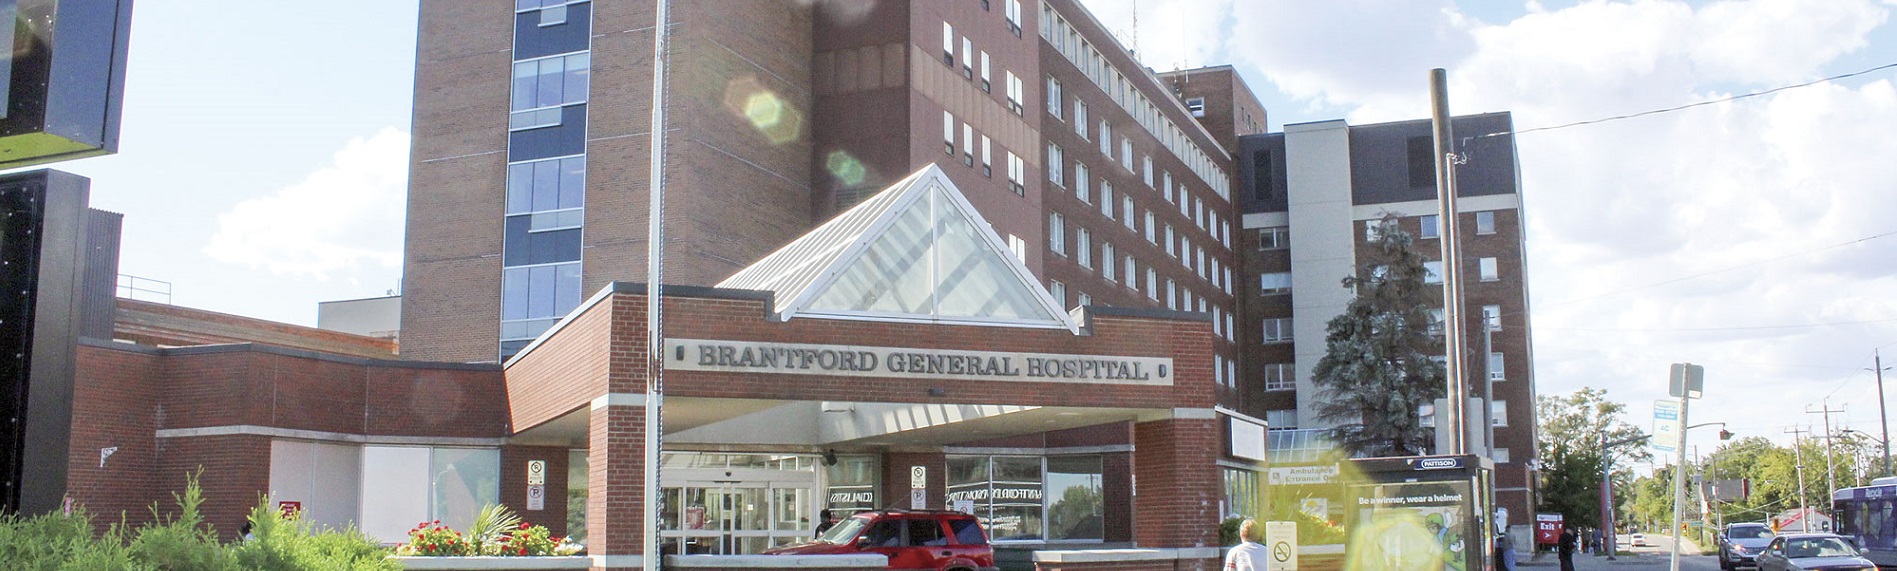 Exterior of Brantford General Hospital